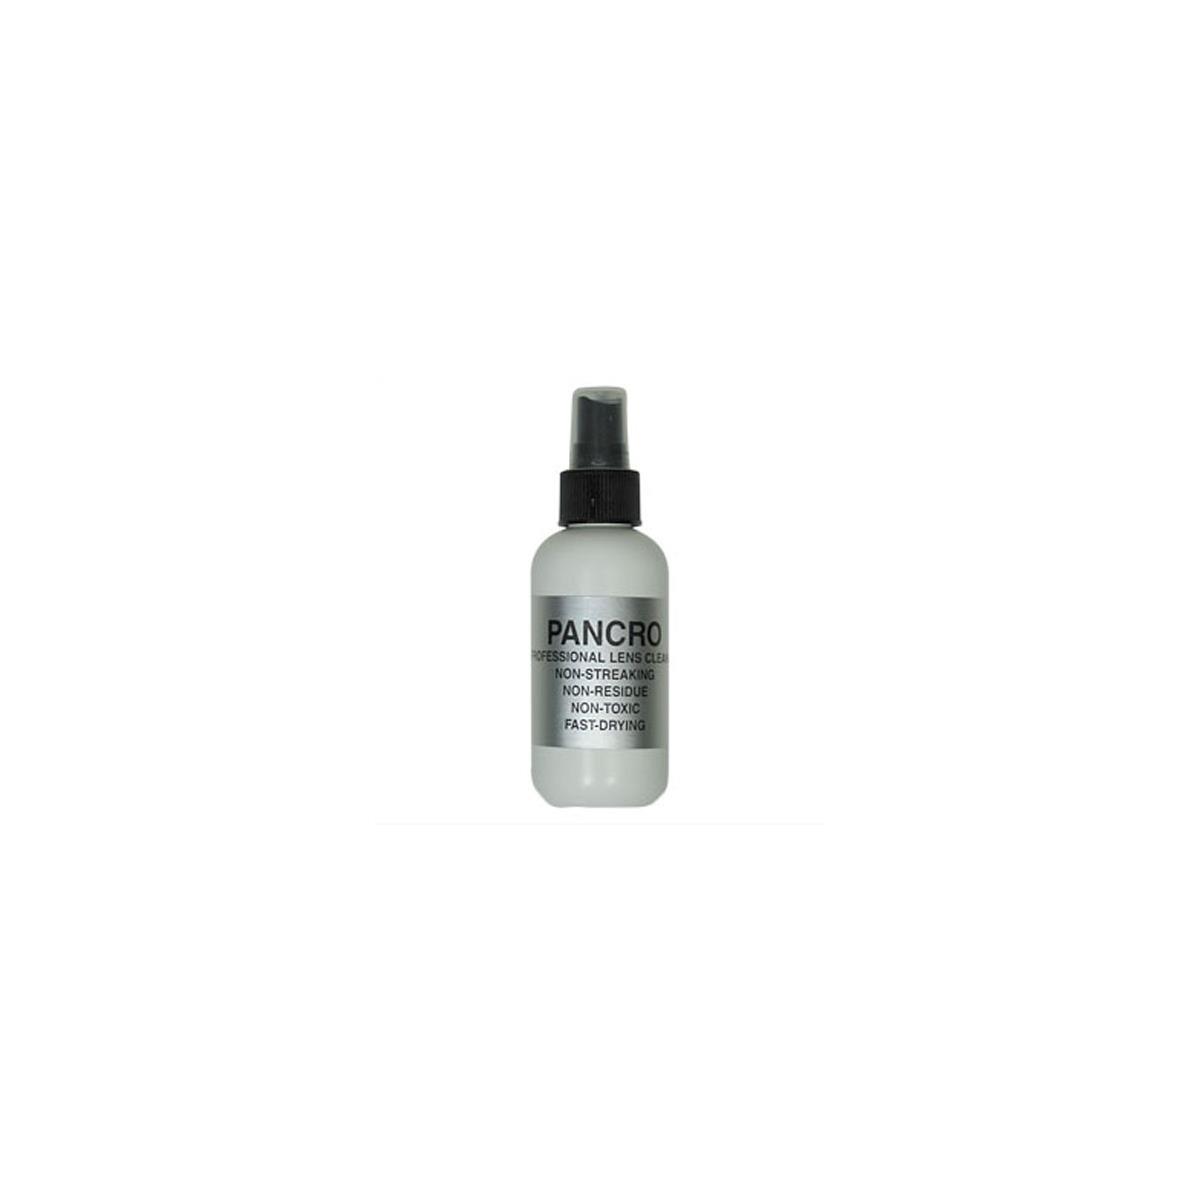 Image of Pancro Professional Lens Cleaner 4oz. Spray Bottle